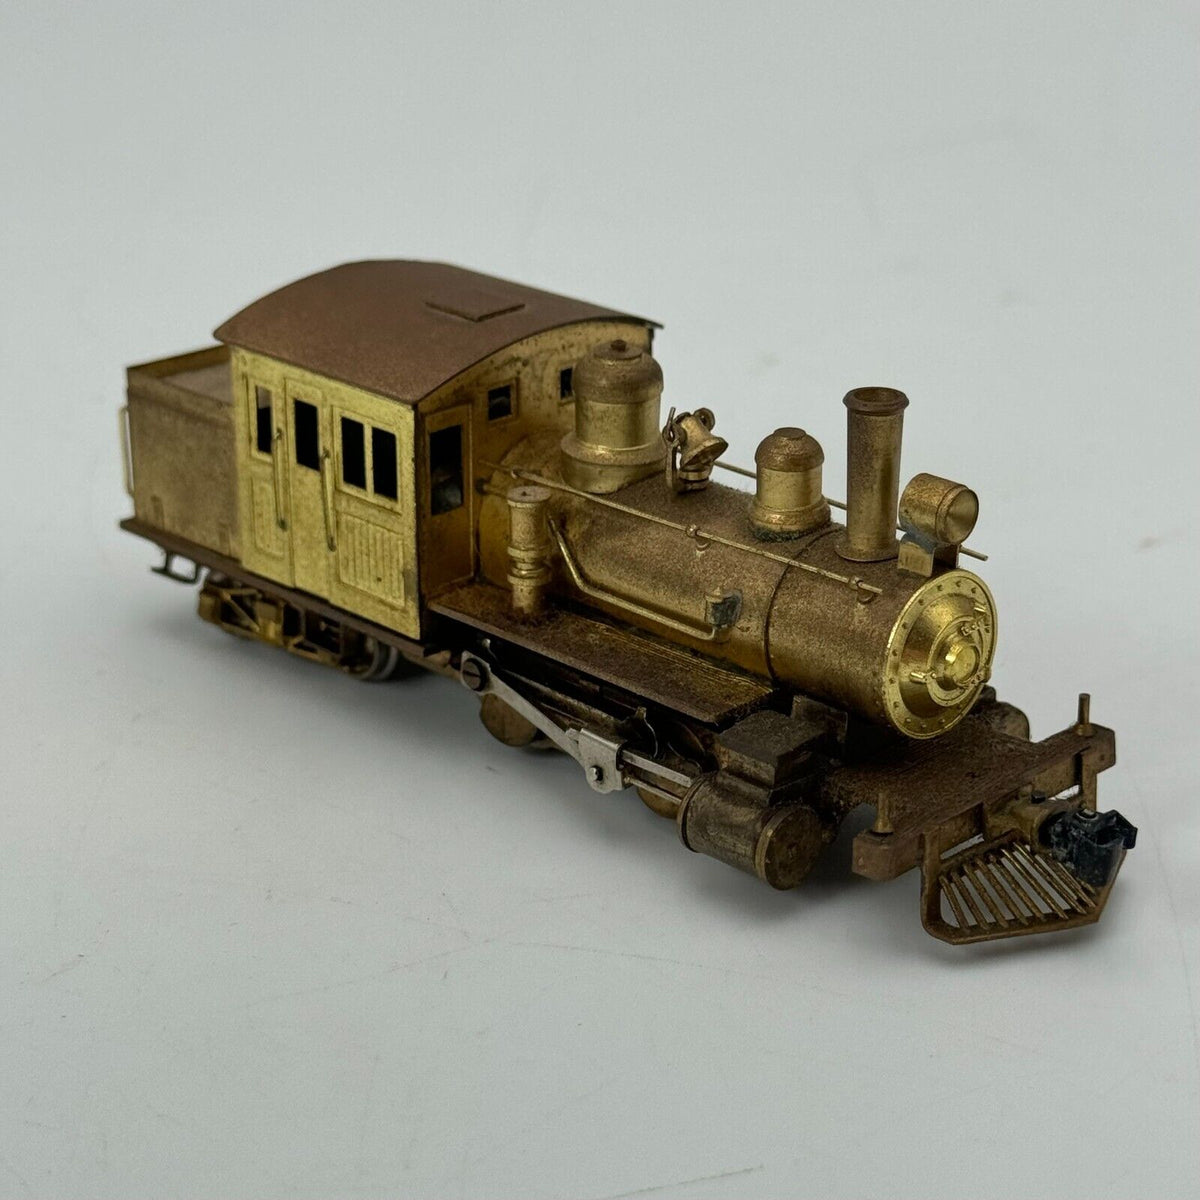 Ken Kidder Box 213 HOn3 Scale 2-4-4T Forney Ready to Run Railroad Model Steam